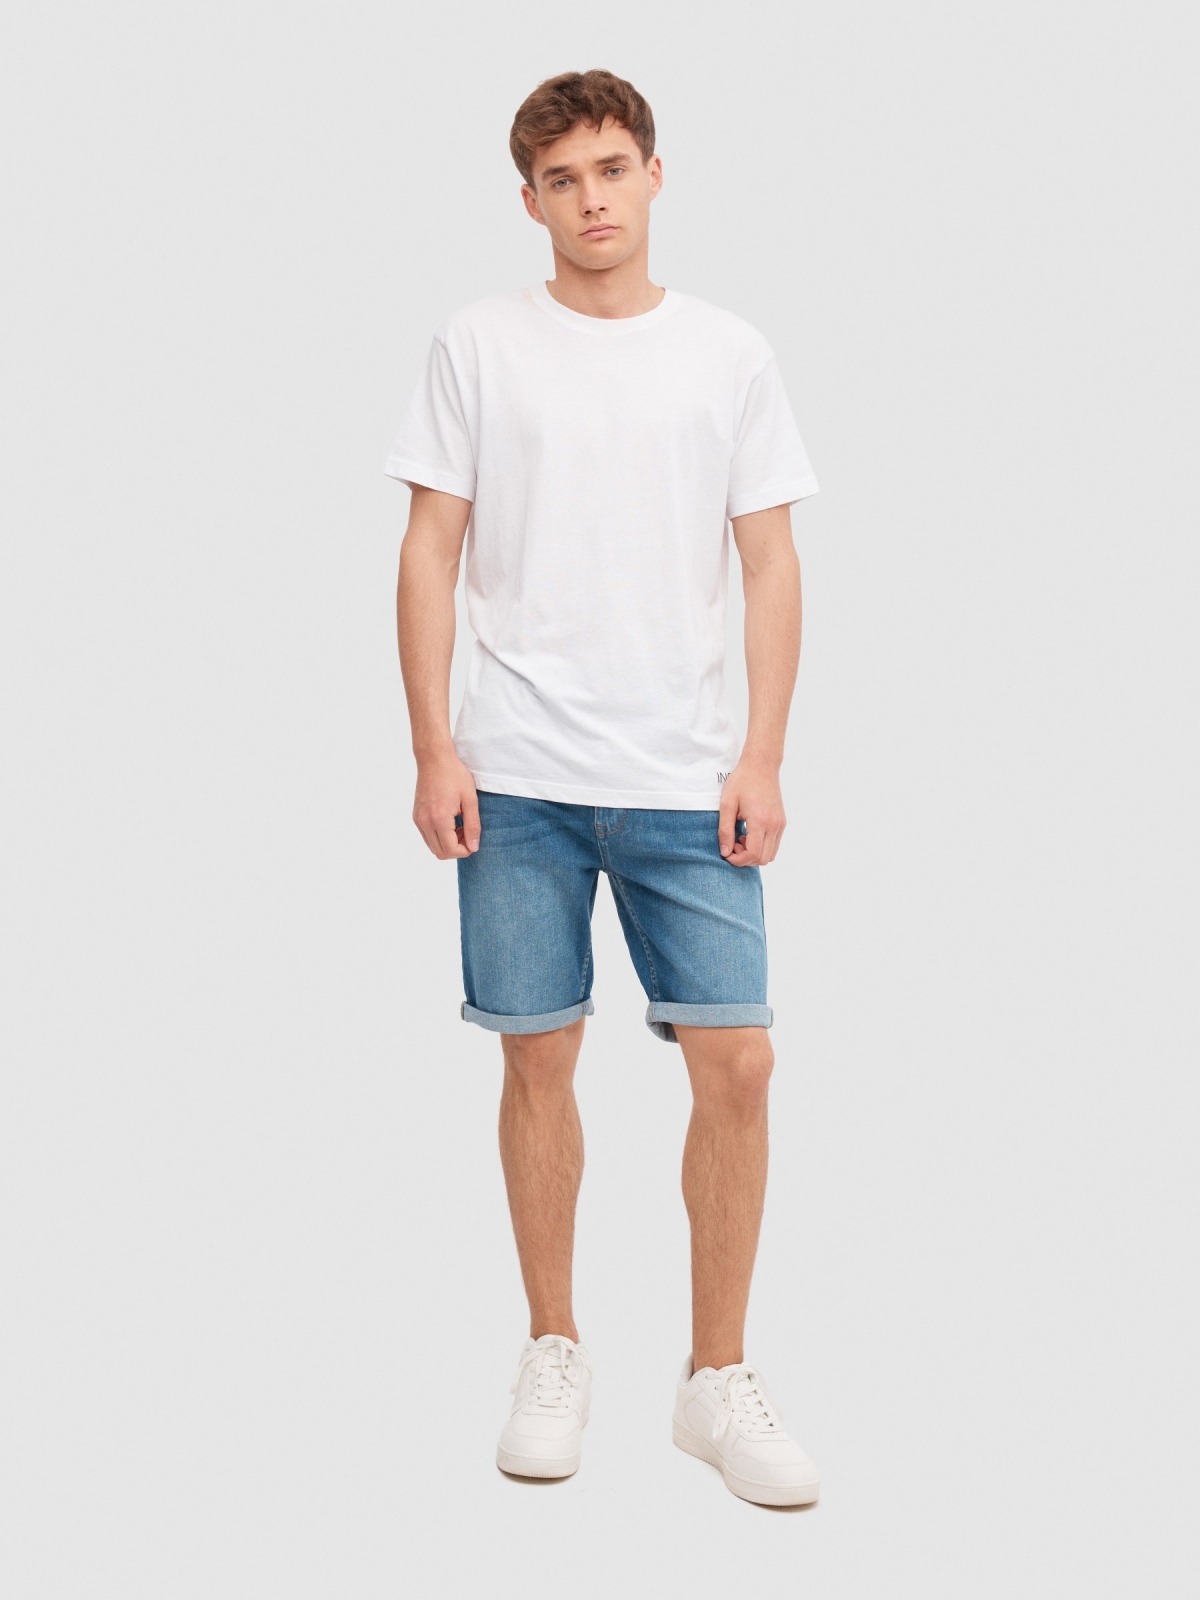 Slim denim shorts blue front view